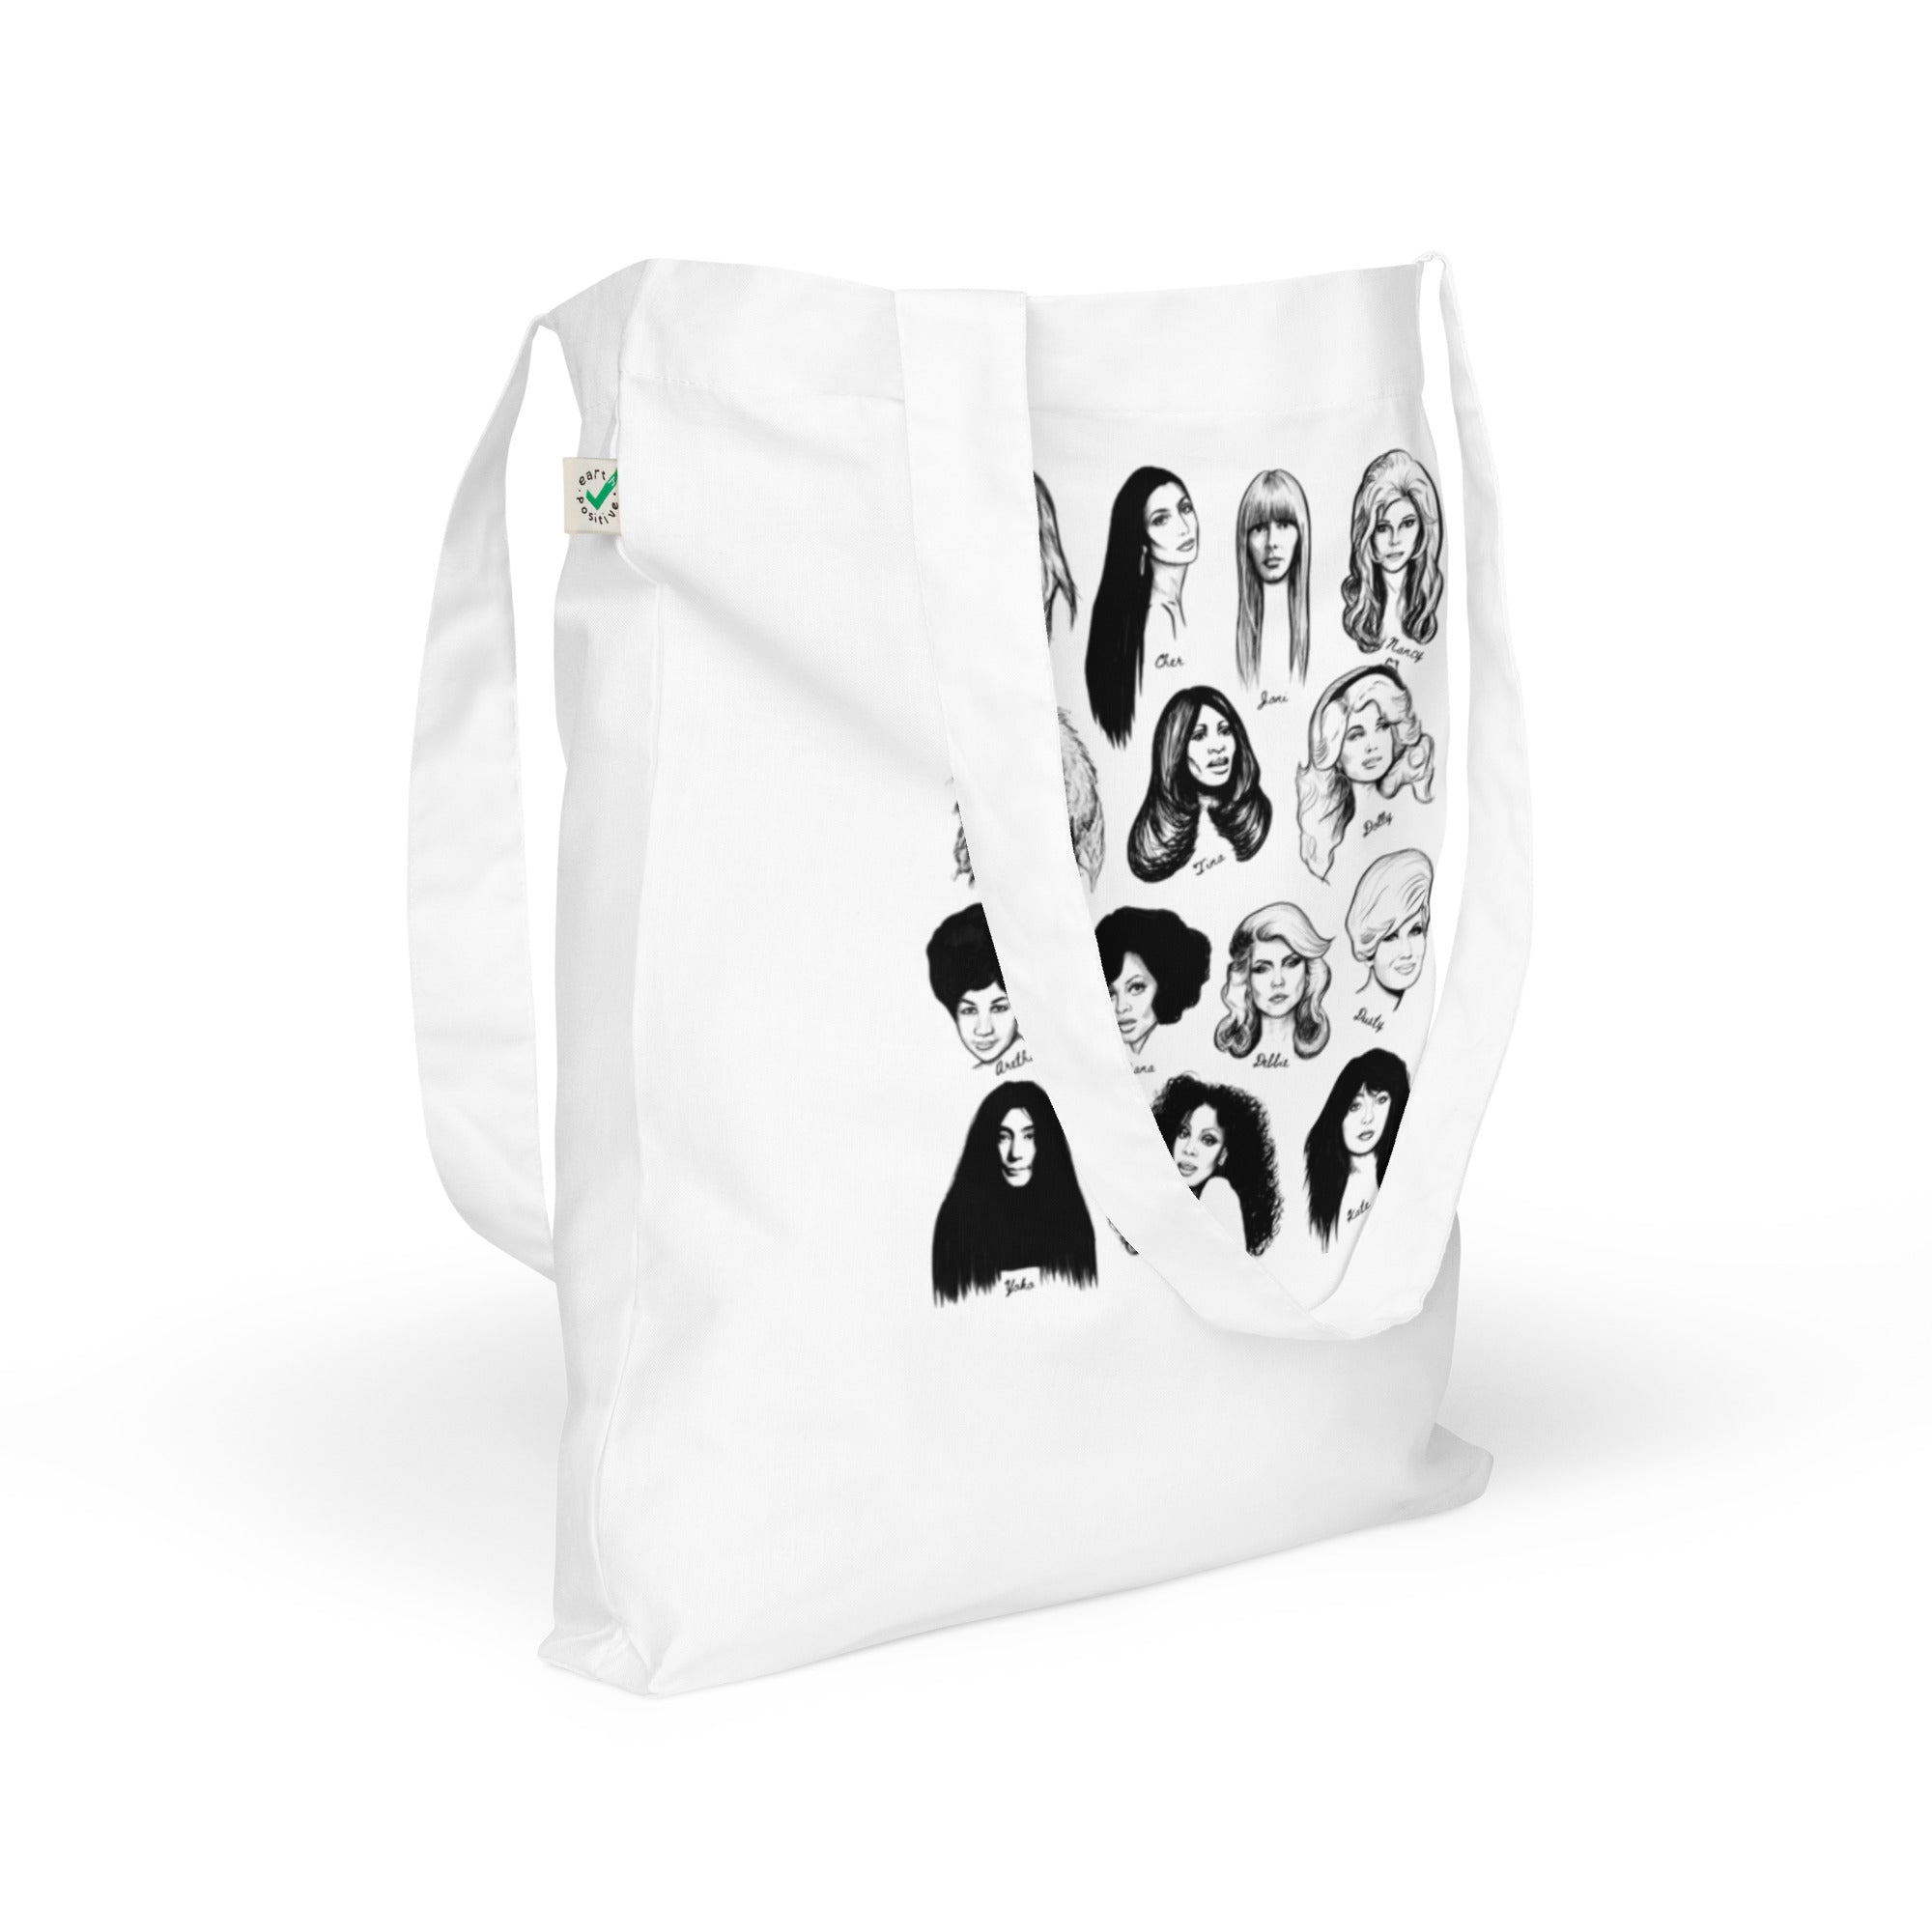 'WOMEN IN MUSIC' Mono Line Art Printed Organic fashion tote bag